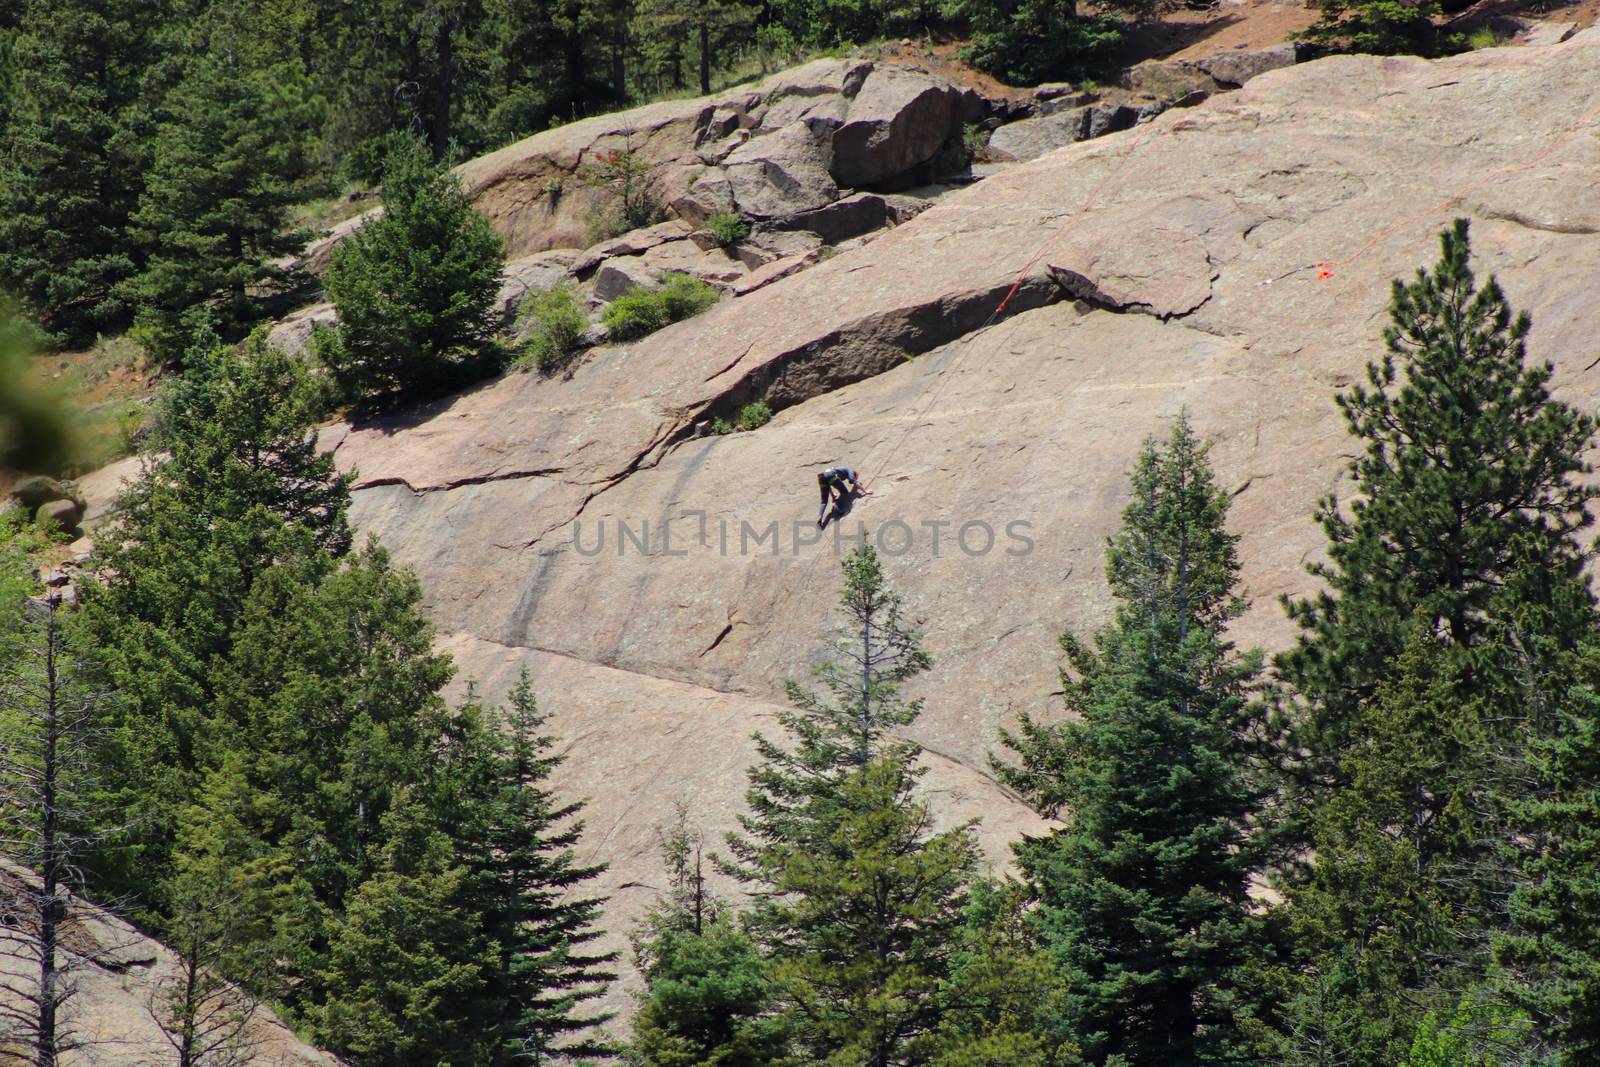 Helen hunt's falls Colorado Man rock climbing summer 2019